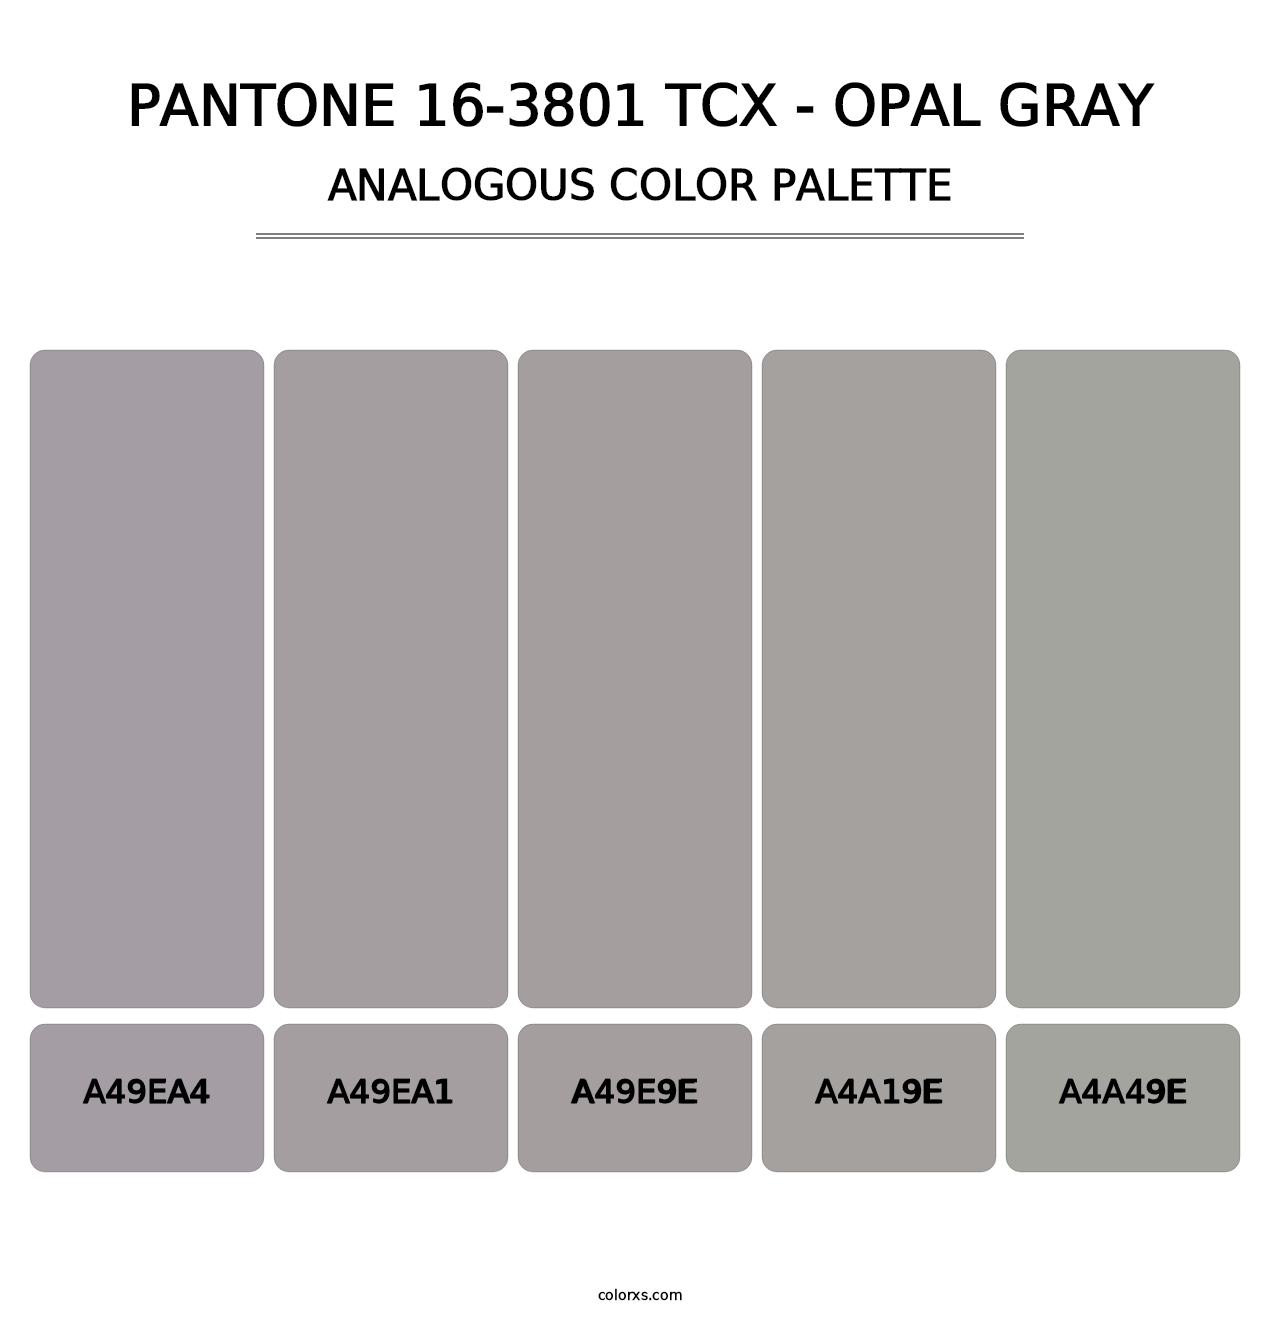 PANTONE 16-3801 TCX - Opal Gray - Analogous Color Palette